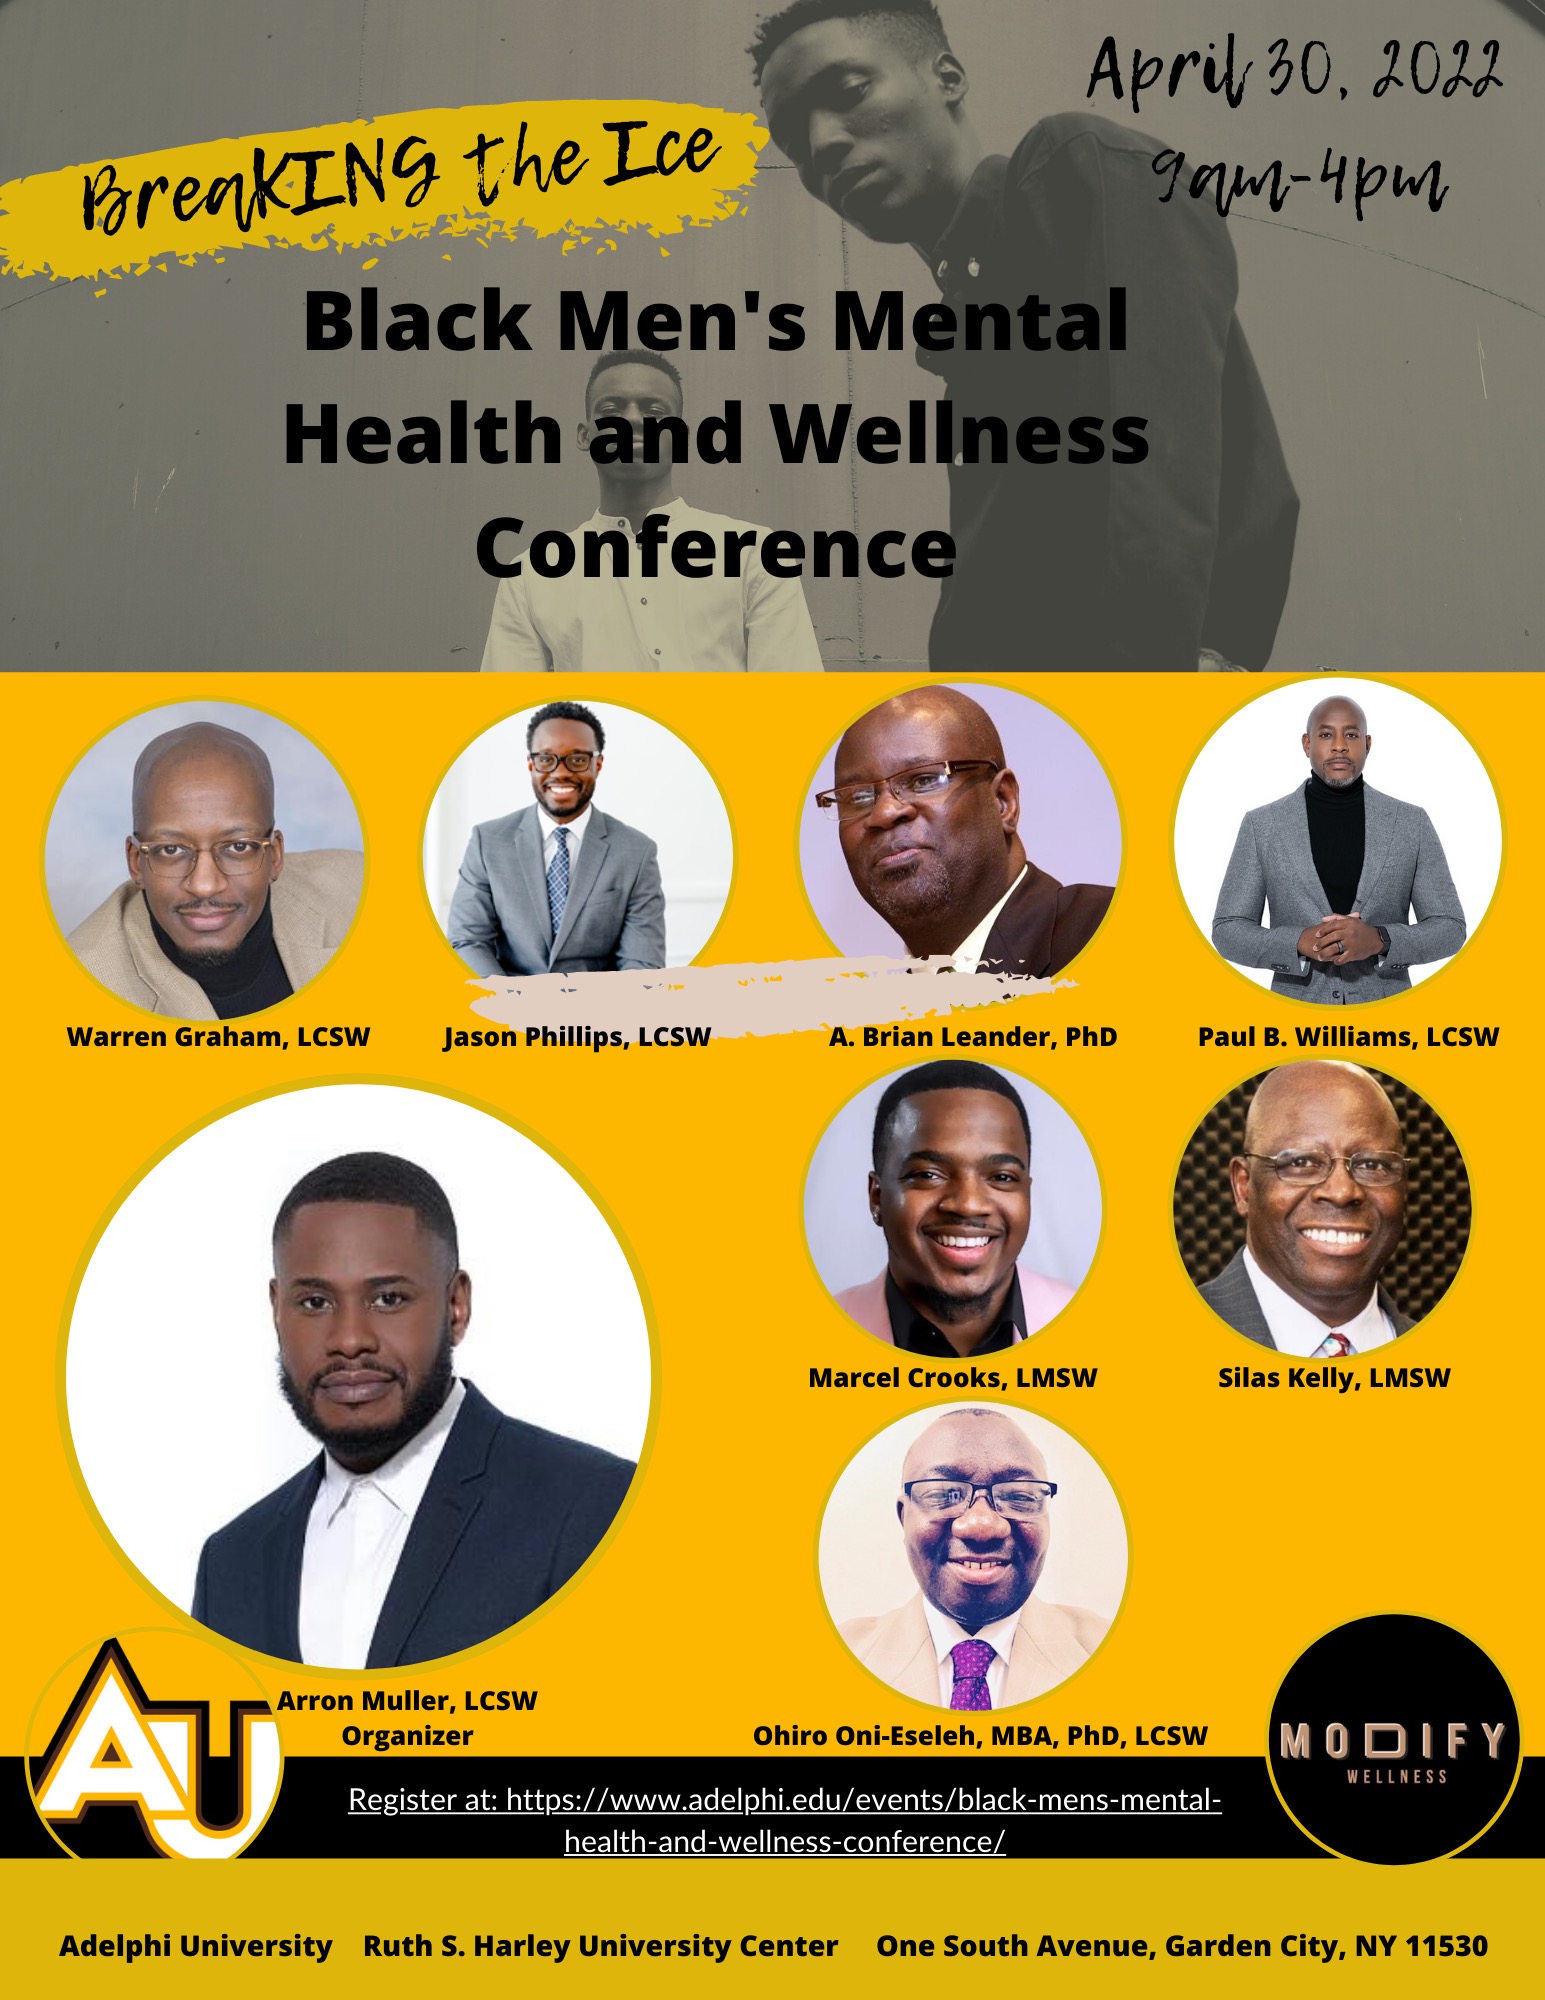 Adelphi Conference to Focus on Black Men's Mental Health, Wellness